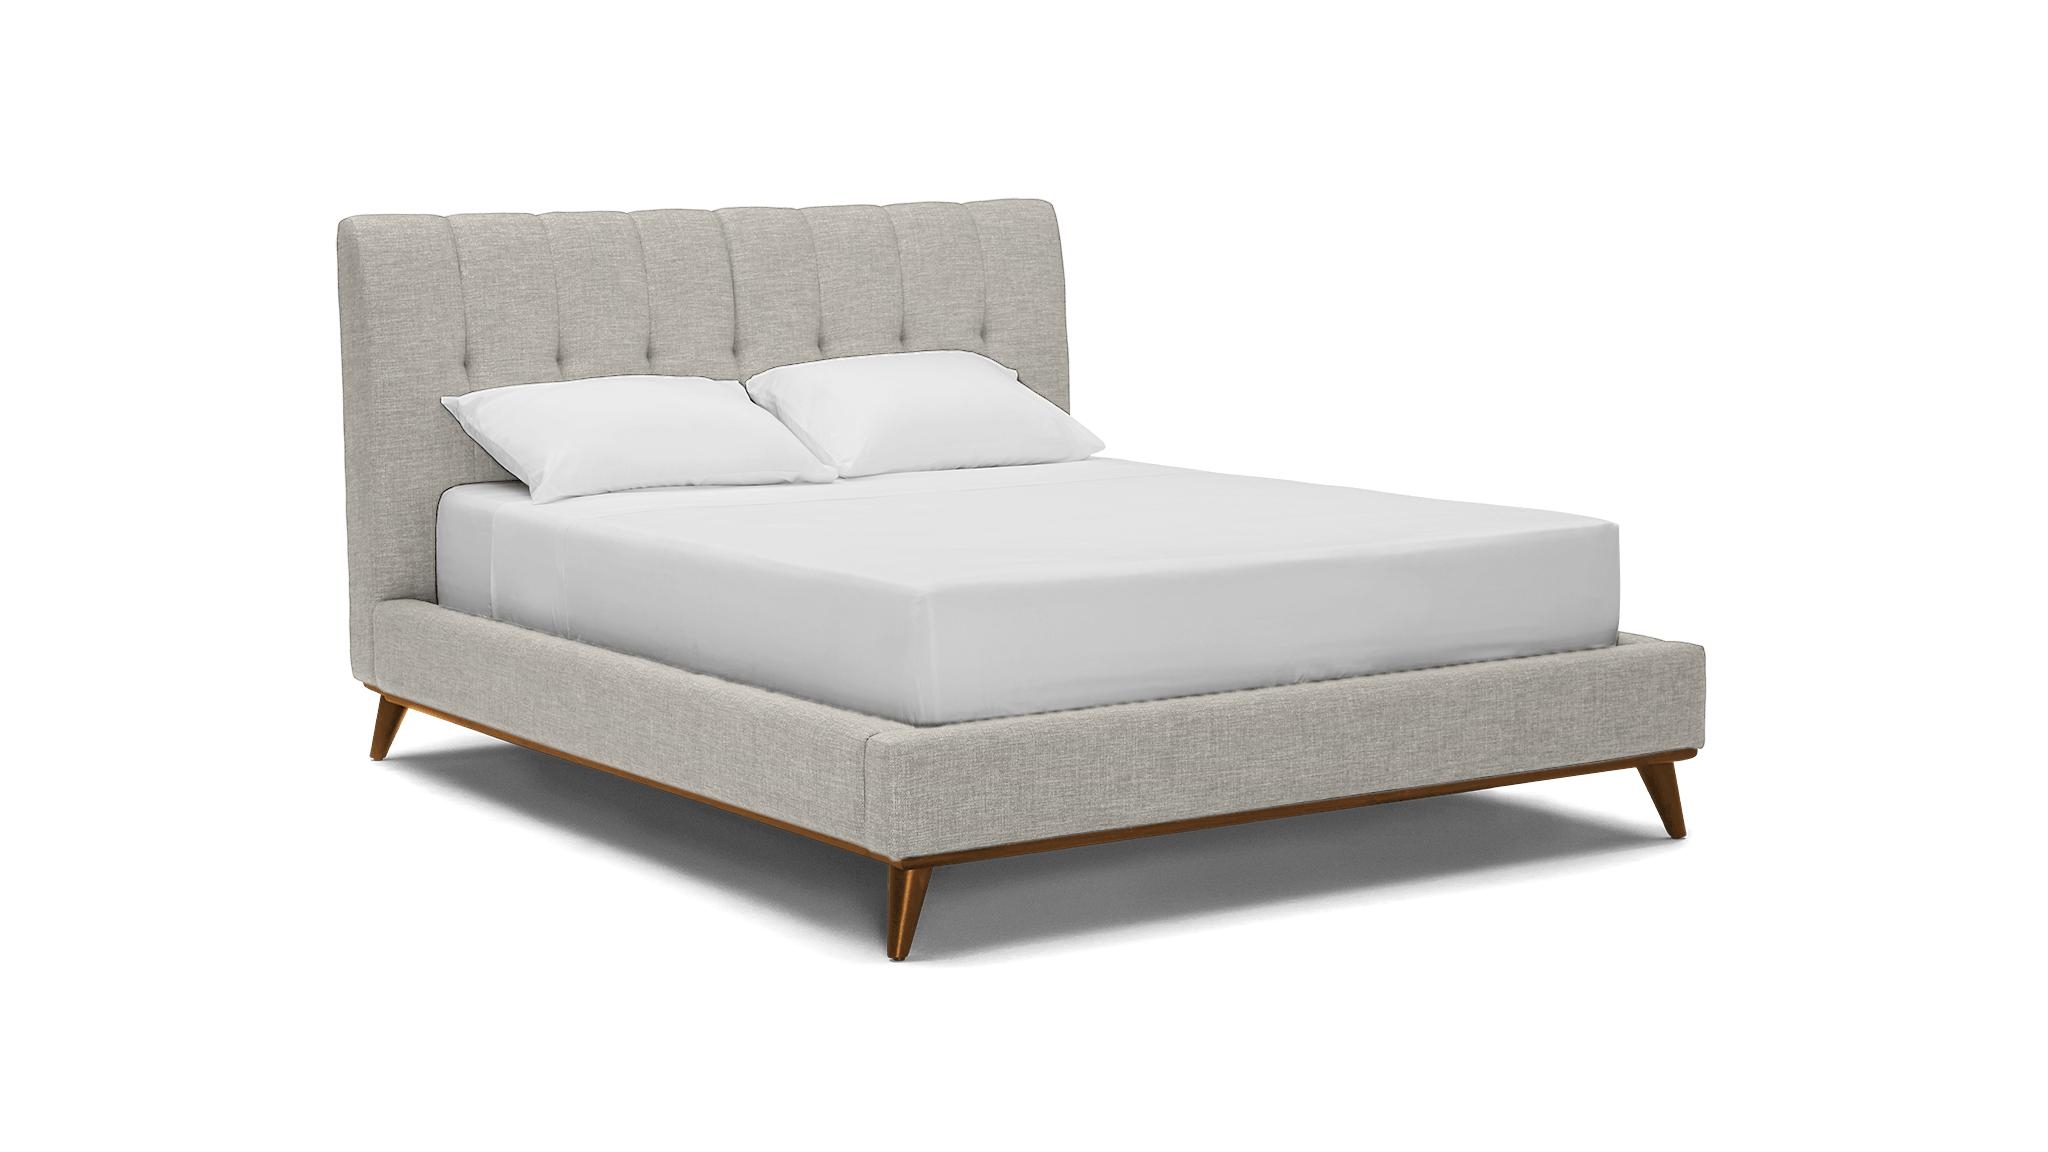 Gray Hughes Mid Century Modern Bed - Bloke Cotton - Mocha - Cal King - Image 1